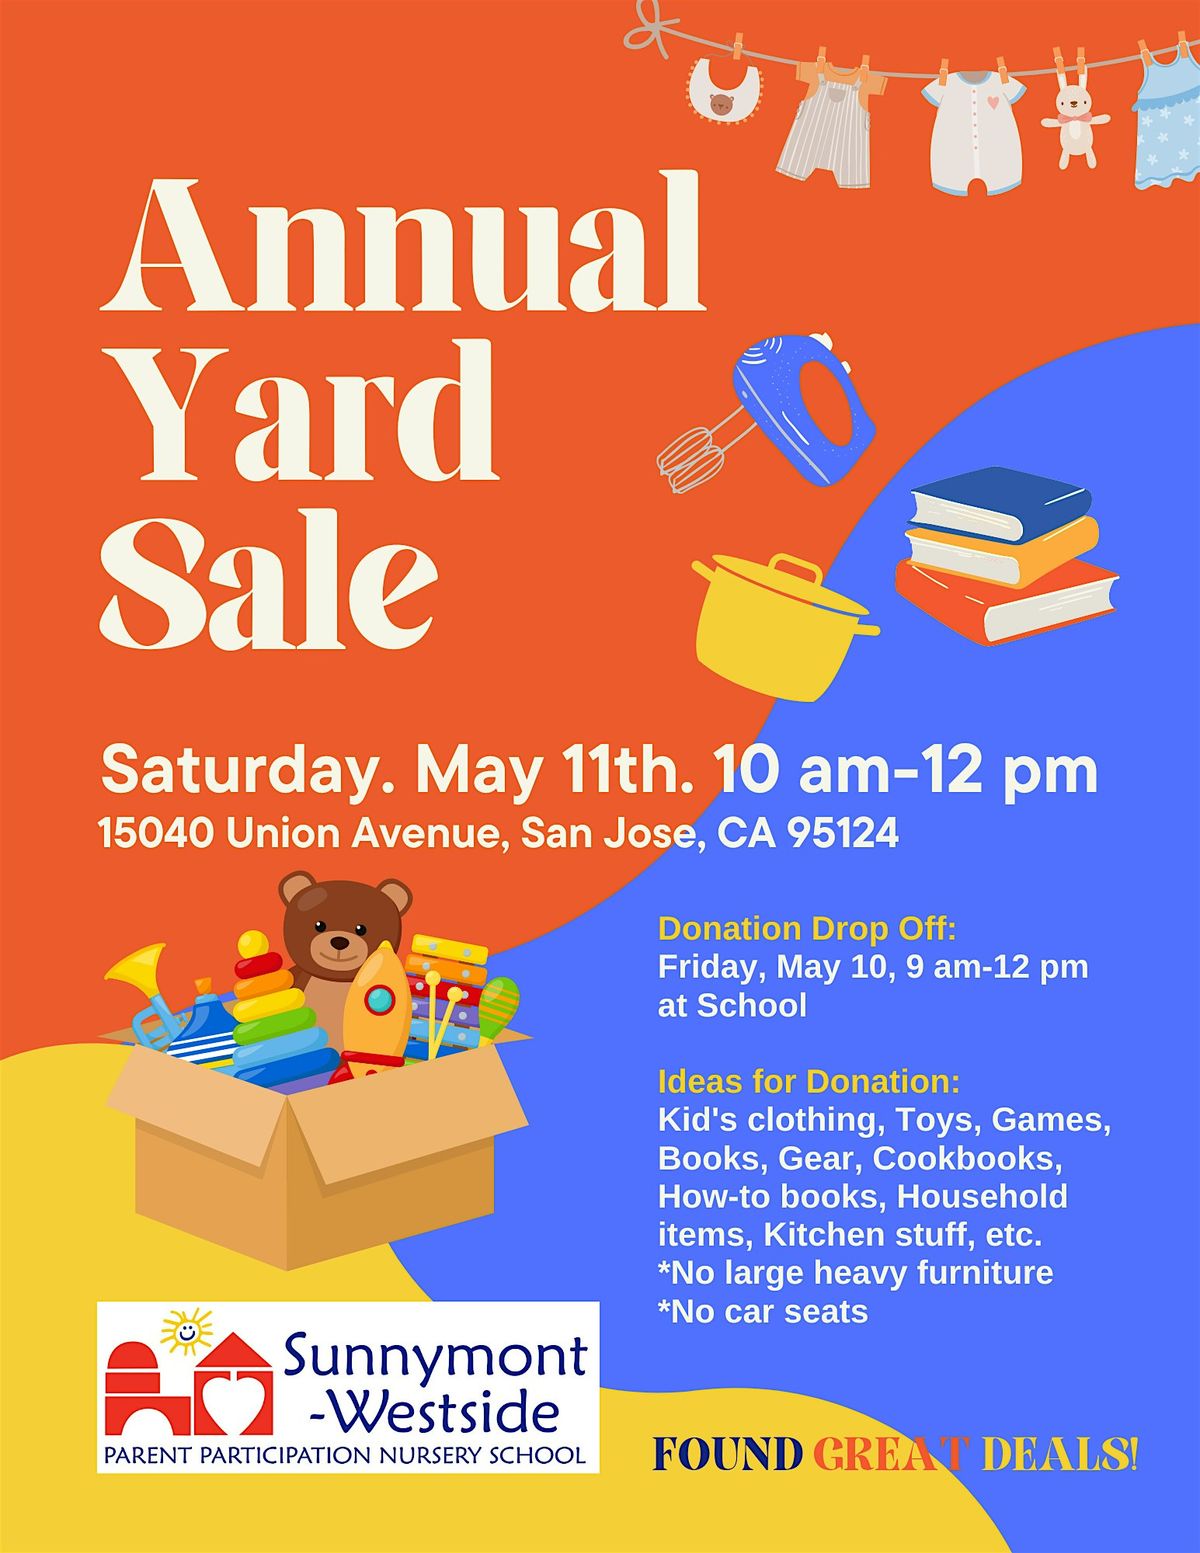 Sunnymont-Westside Annual Yard Sale